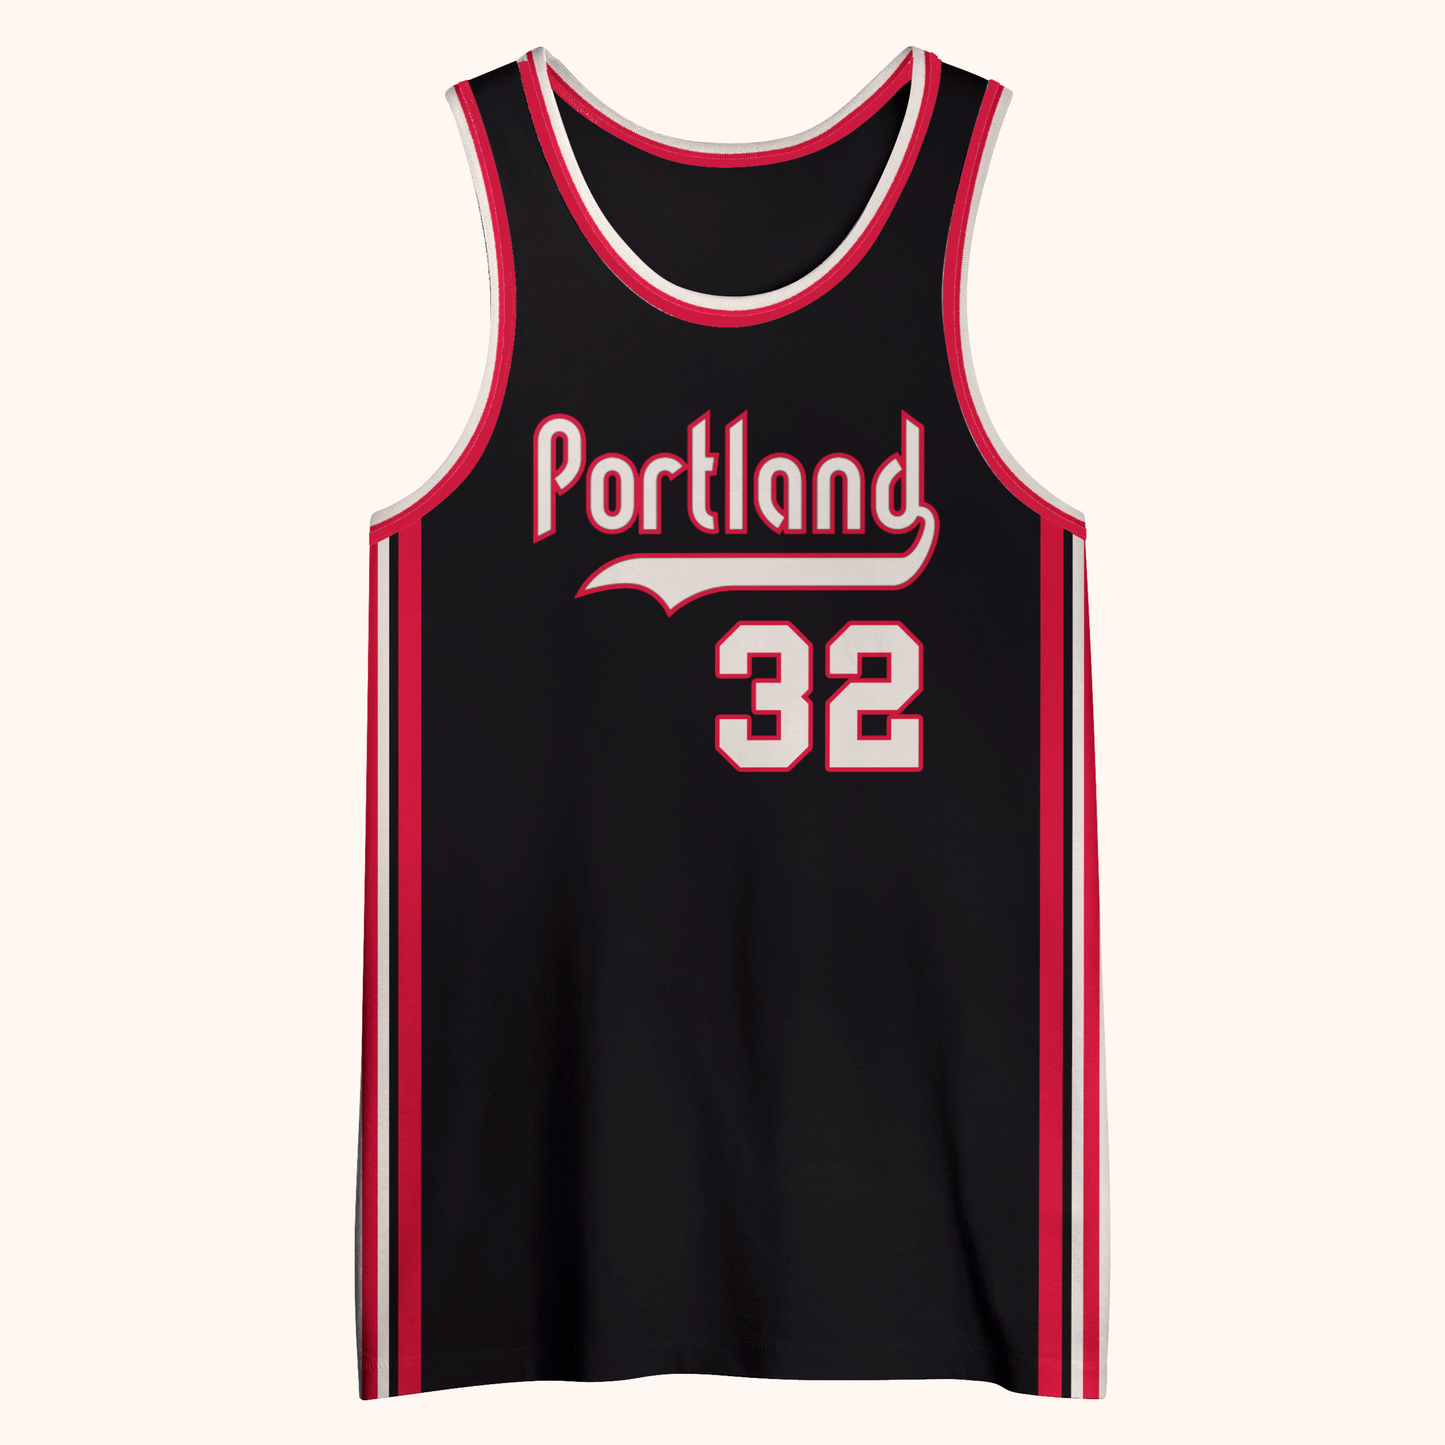 Portland Basketball Jersey